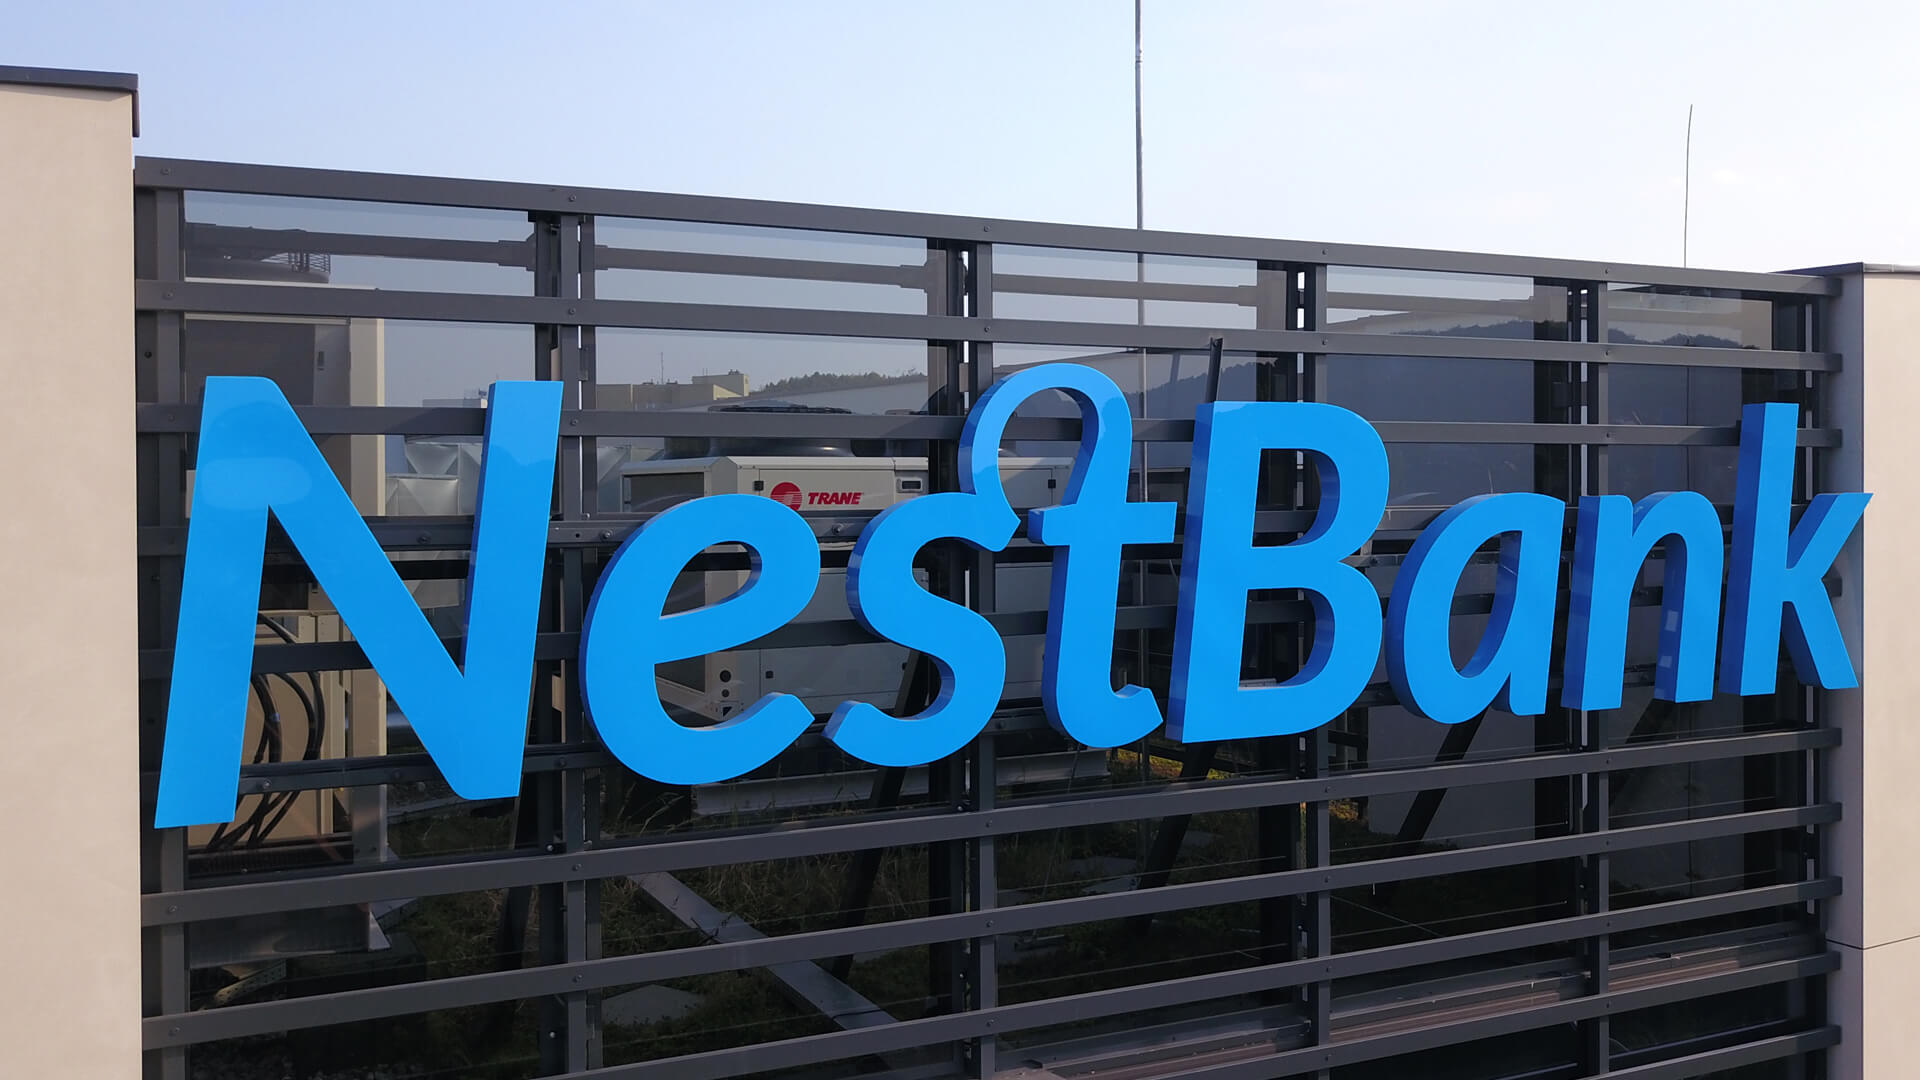 nestbank  - nestbank-3D-led-letters-bank-3d-chanel-letter-advertising-nest-bank-letters-3d-on-the-building-letters-nest-bank